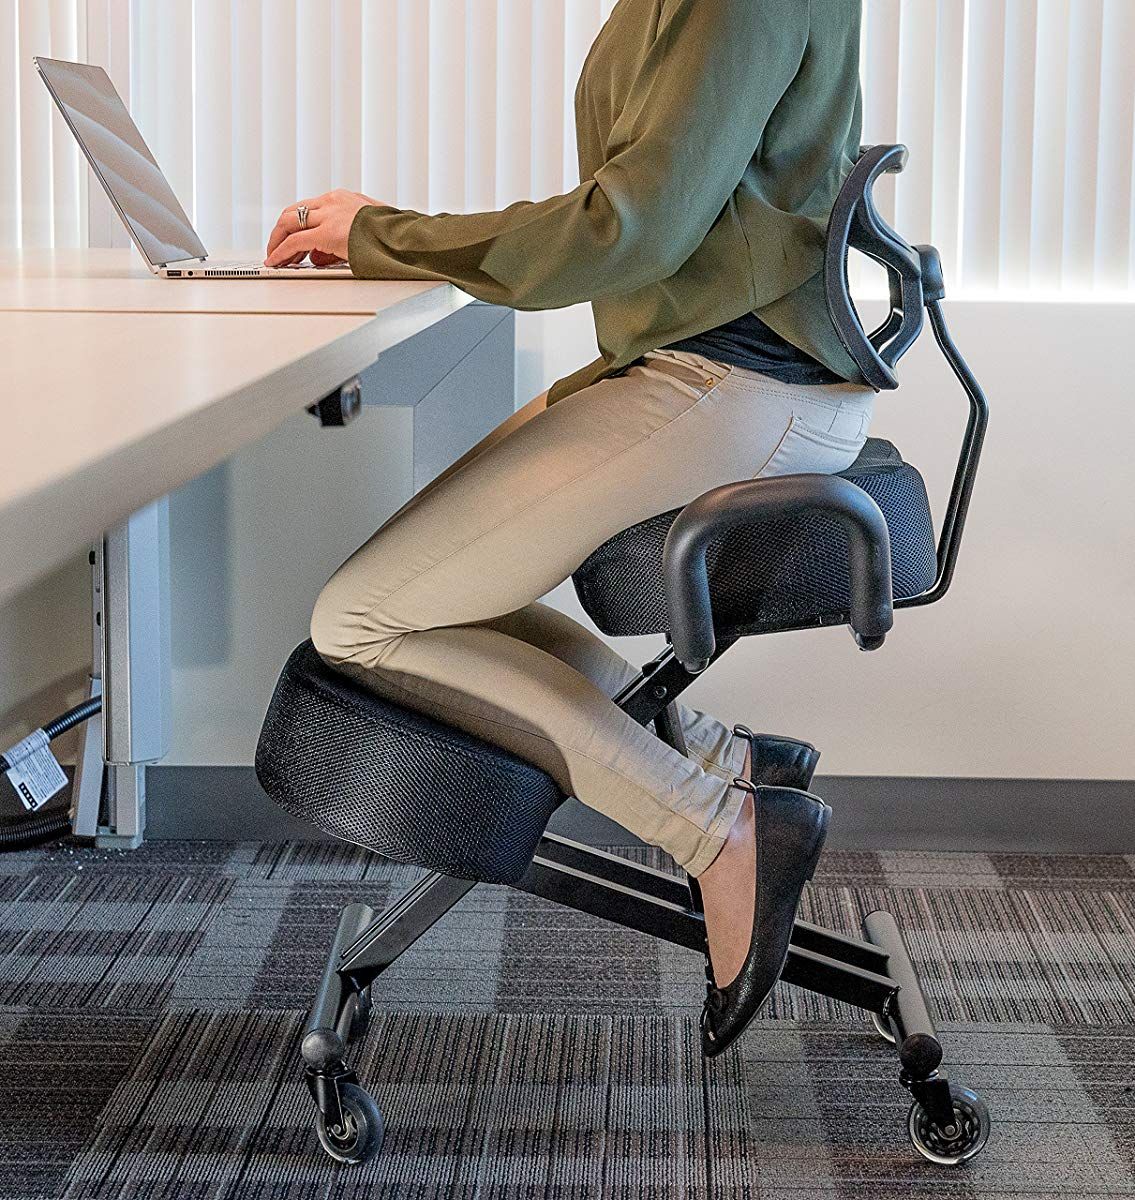 Buy Sleekform Kneeling Chair for Perfect Posture | Ergonomic Knee Stool Relievin…